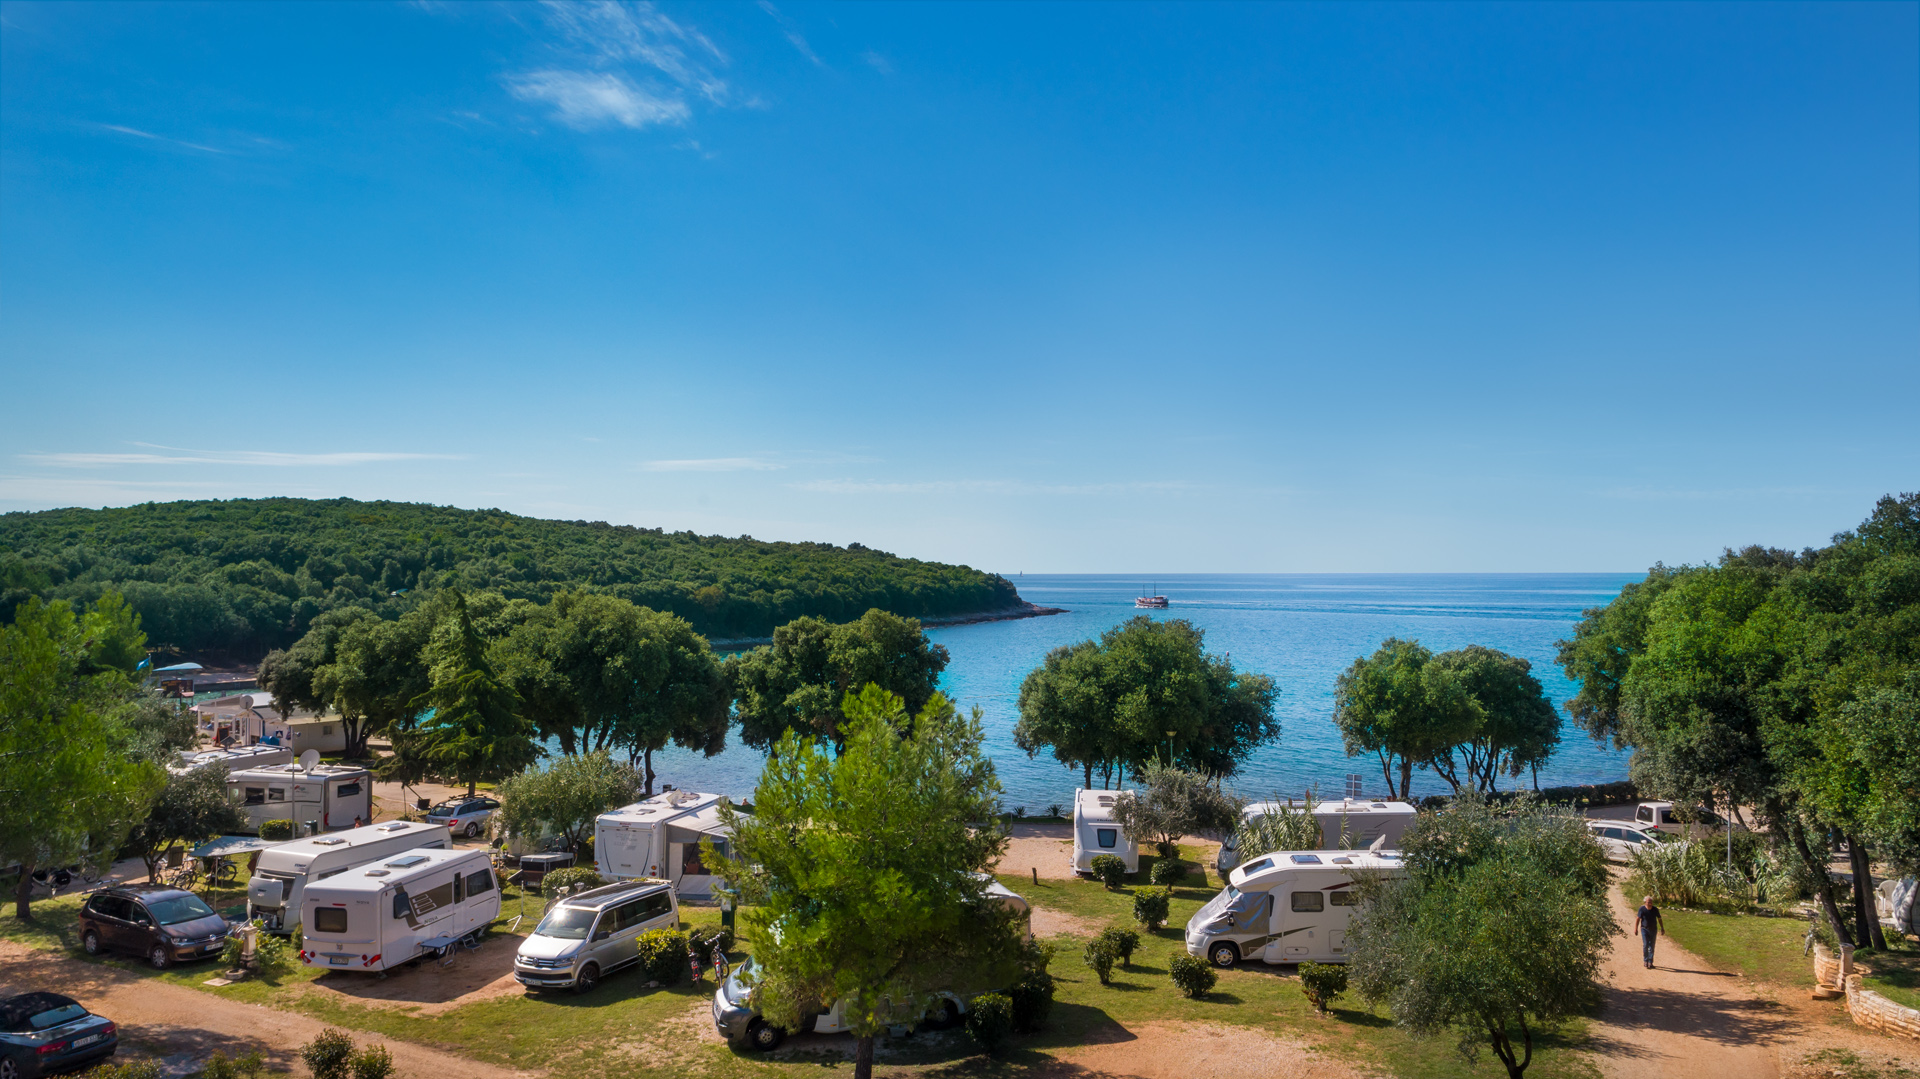 Camping Porto Sole - holidays in Croatia – image 1